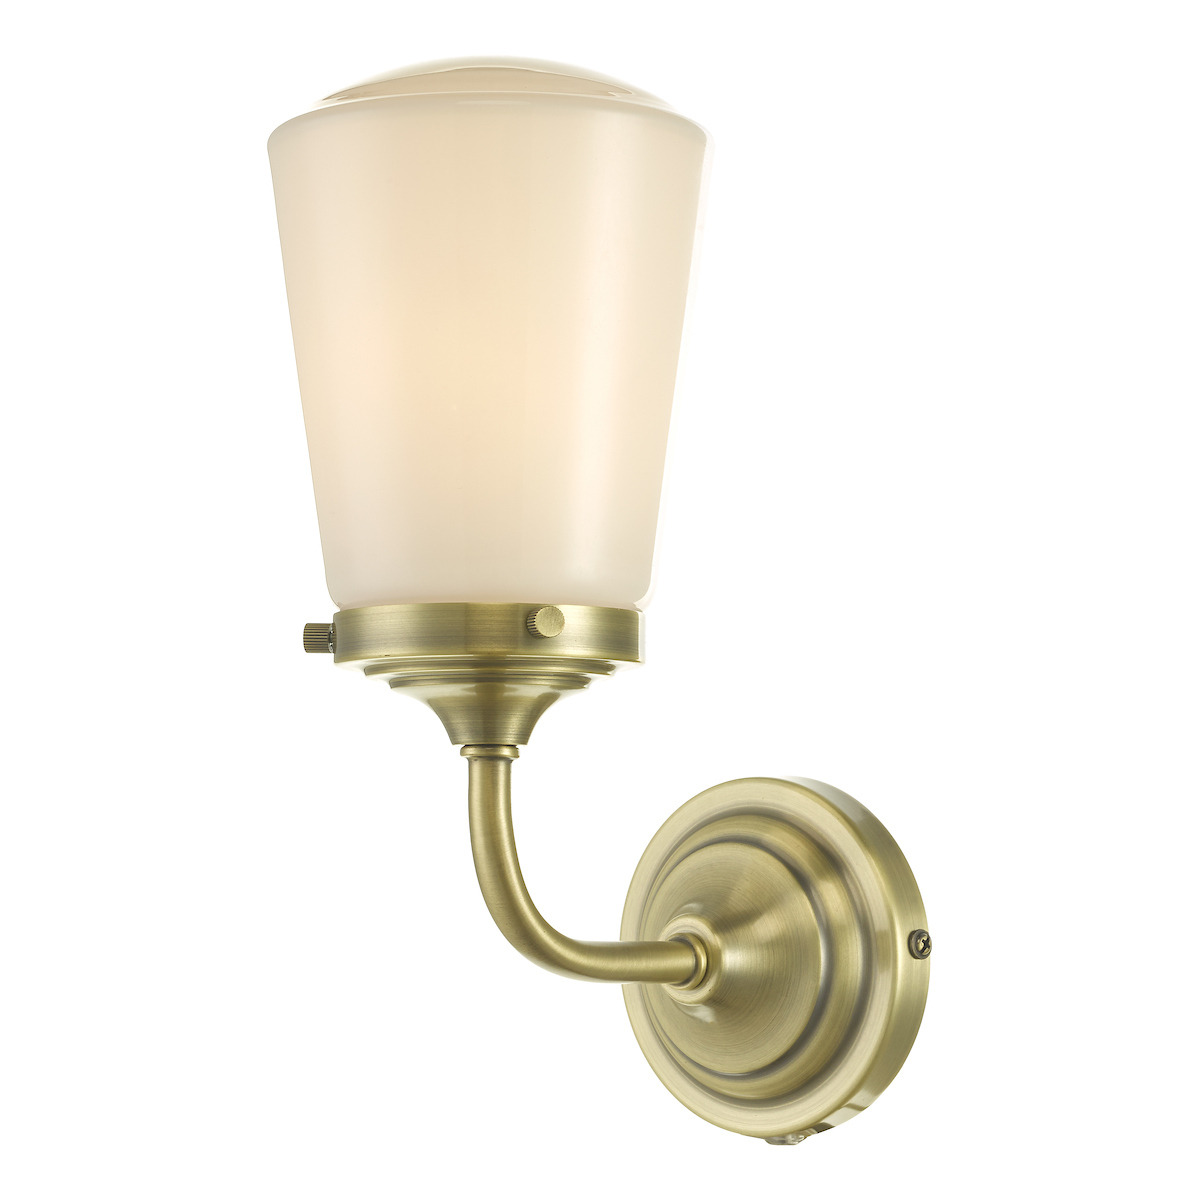 Dar Lighting CAD0775 Caden Bathroom Wall Light In Antique Brass With Opal Glass IP44